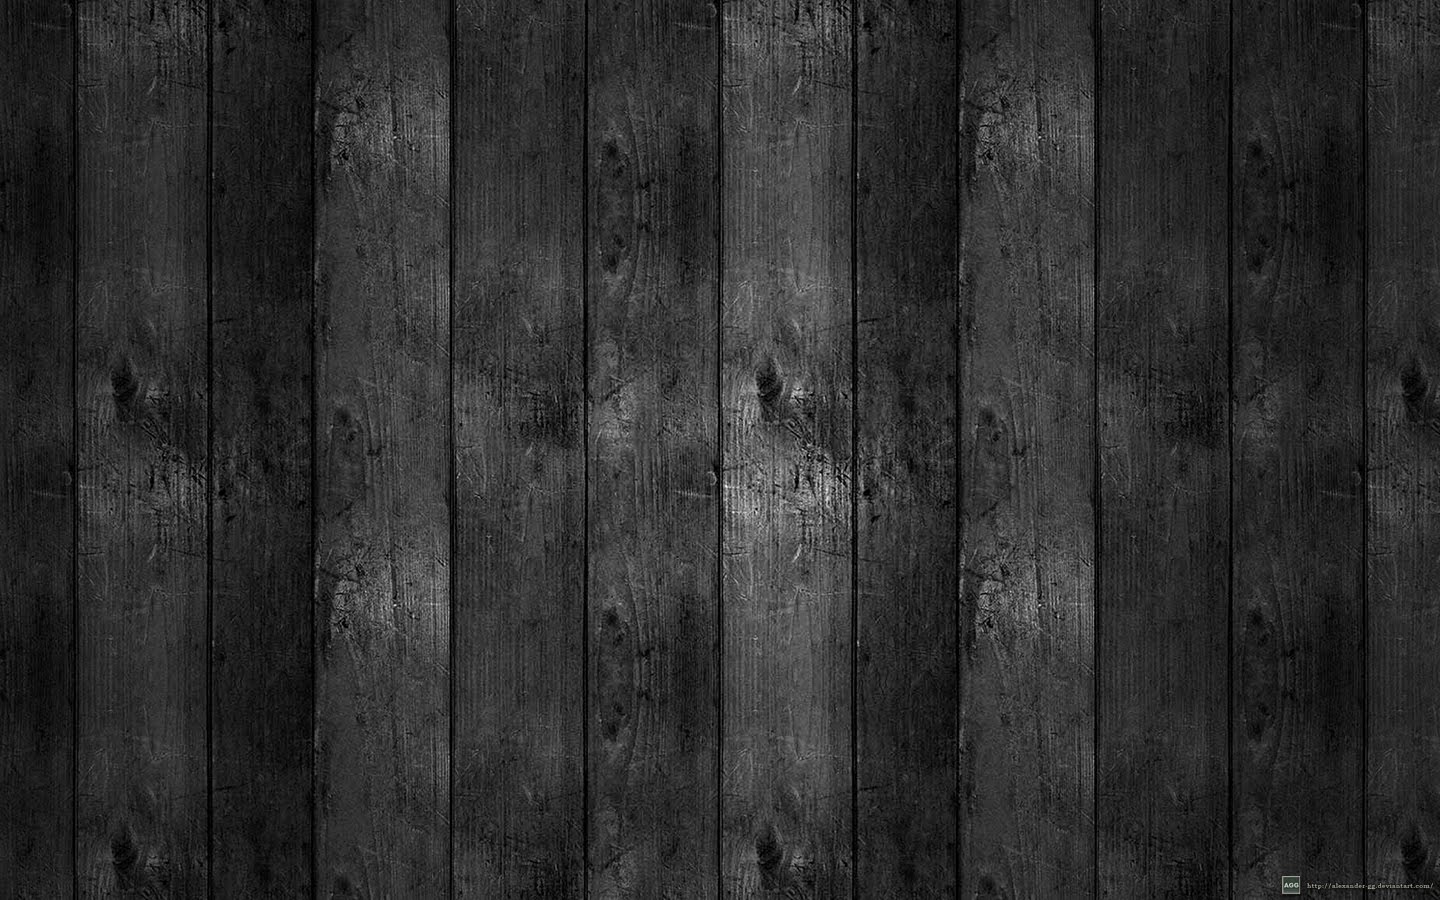 3283073 Black Wood Background Images Stock Photos  Vectors   Shutterstock